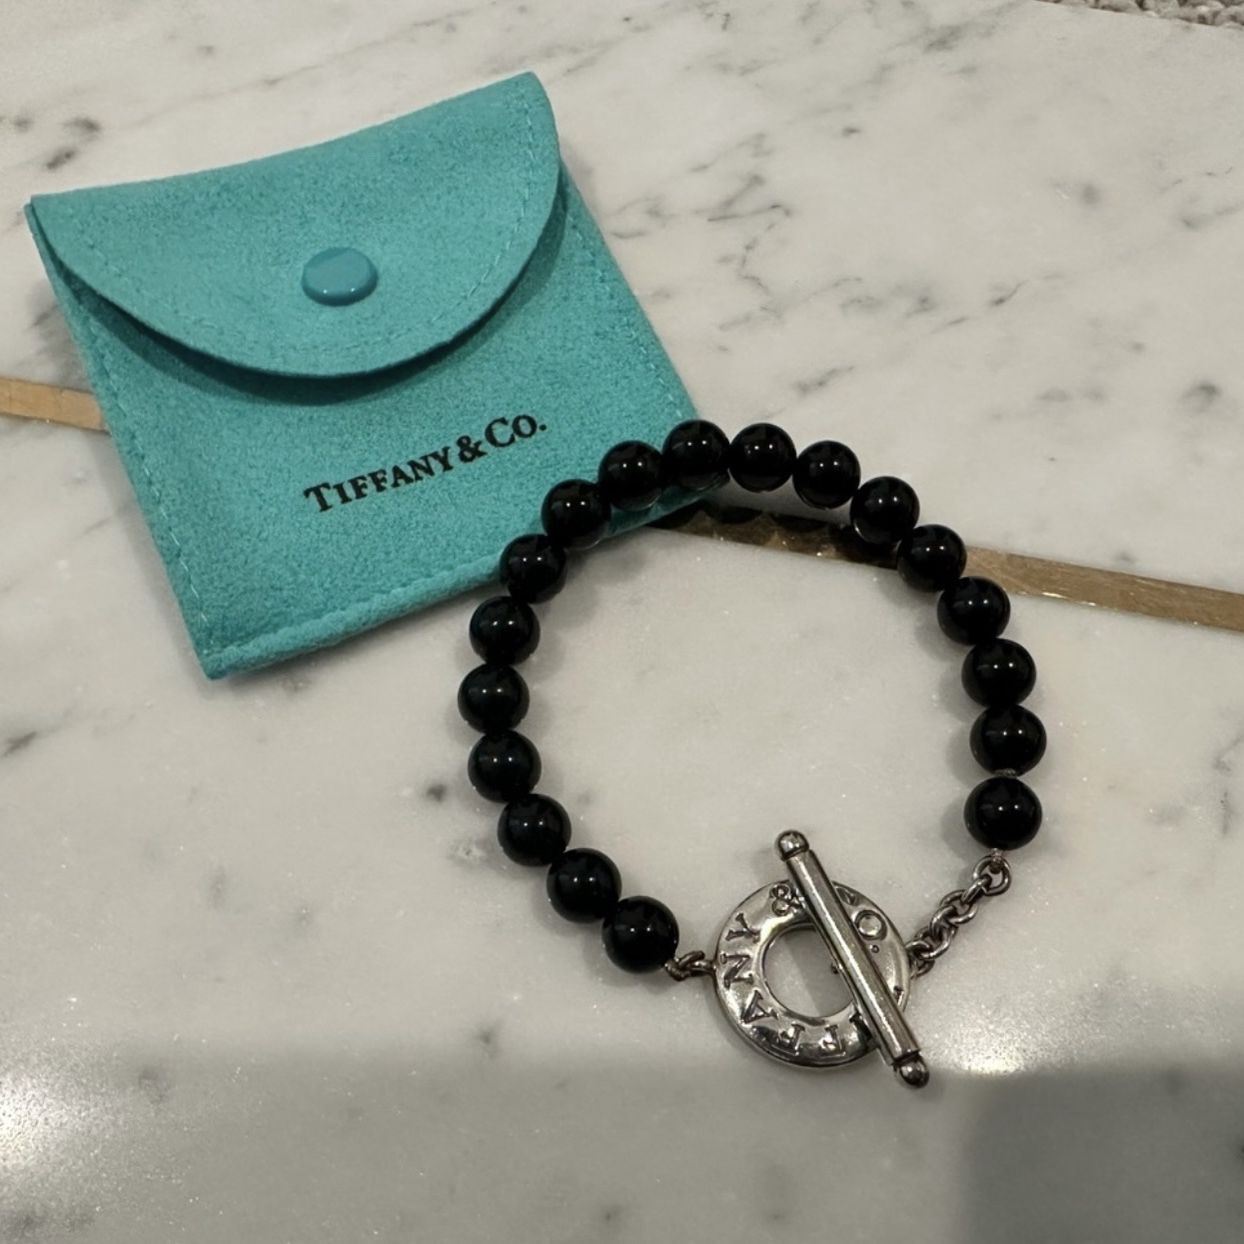 SALE 💐 Tiffany & Co Beads Toggle Bracelet Black Onyx